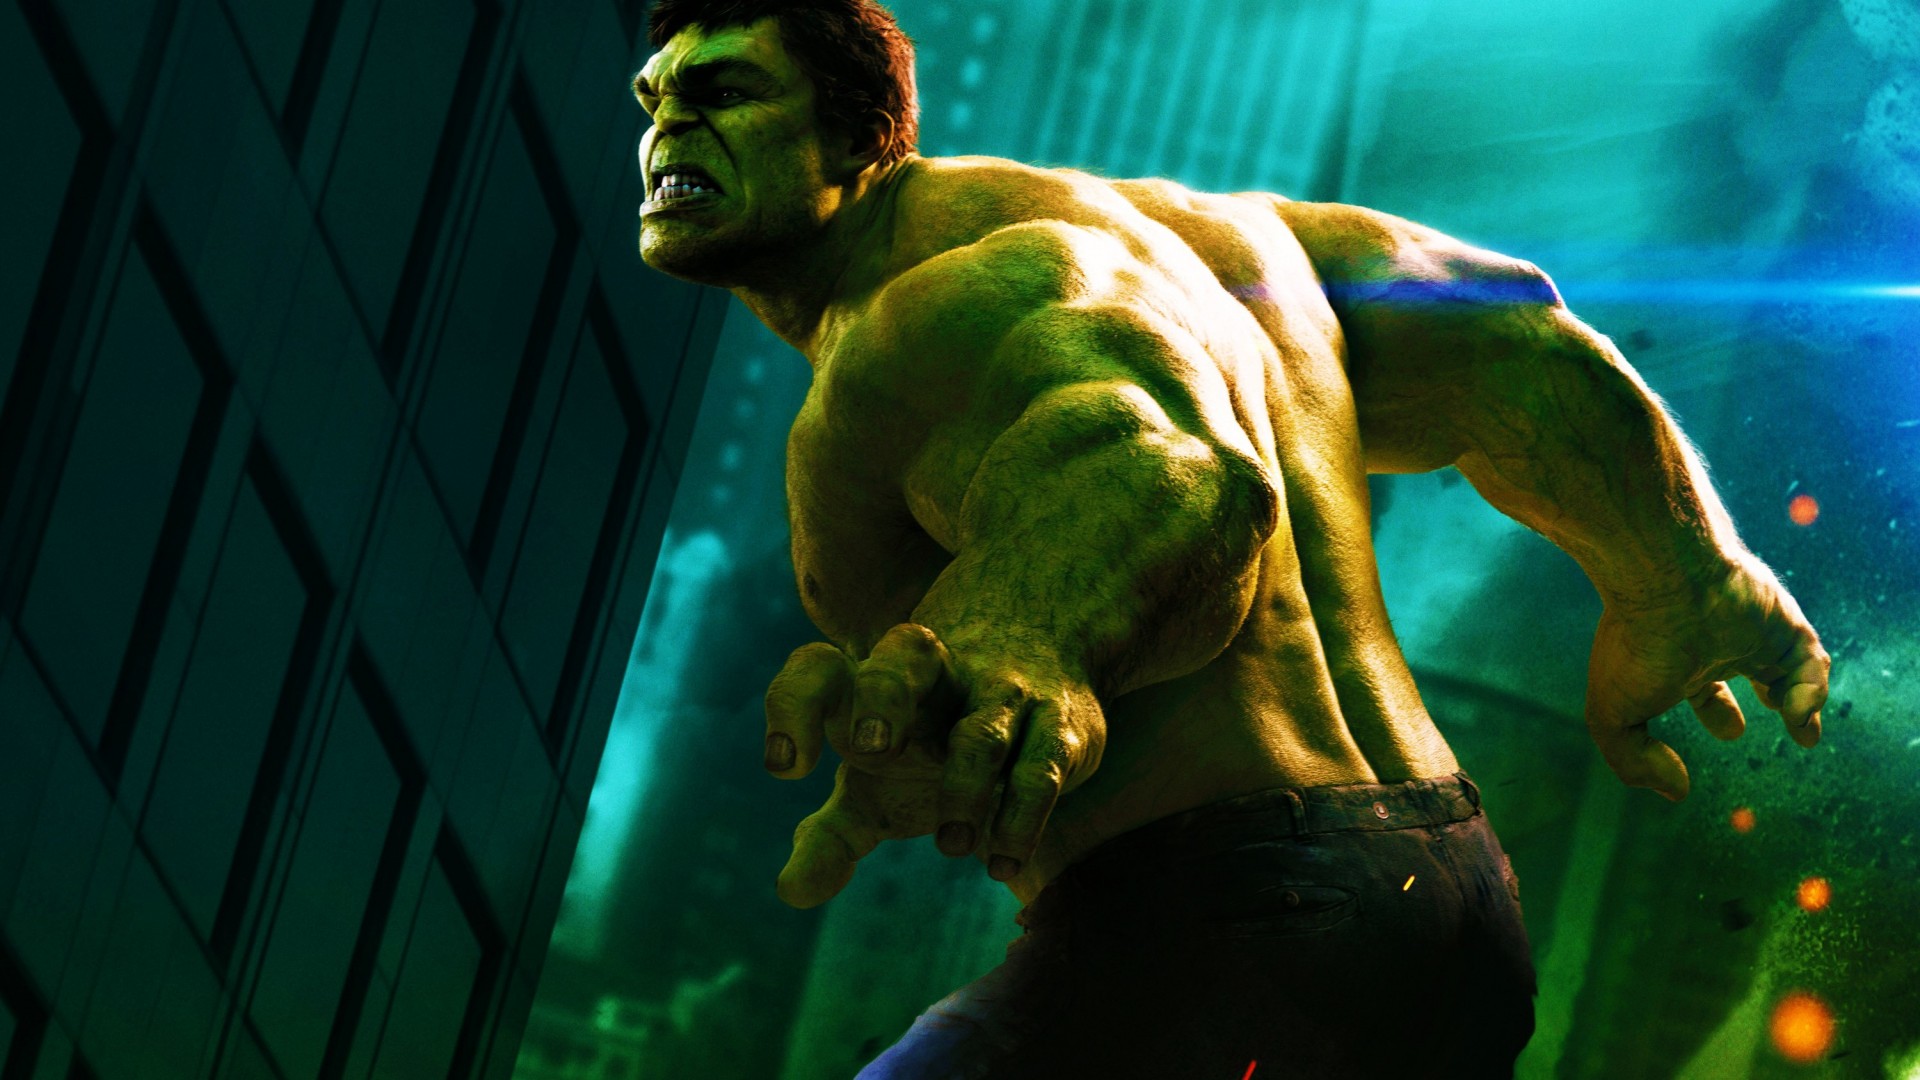 The Hulk - High Definition, High Resolution HD Wallpapers : High Definition,  High Resolution HD Wallpapers